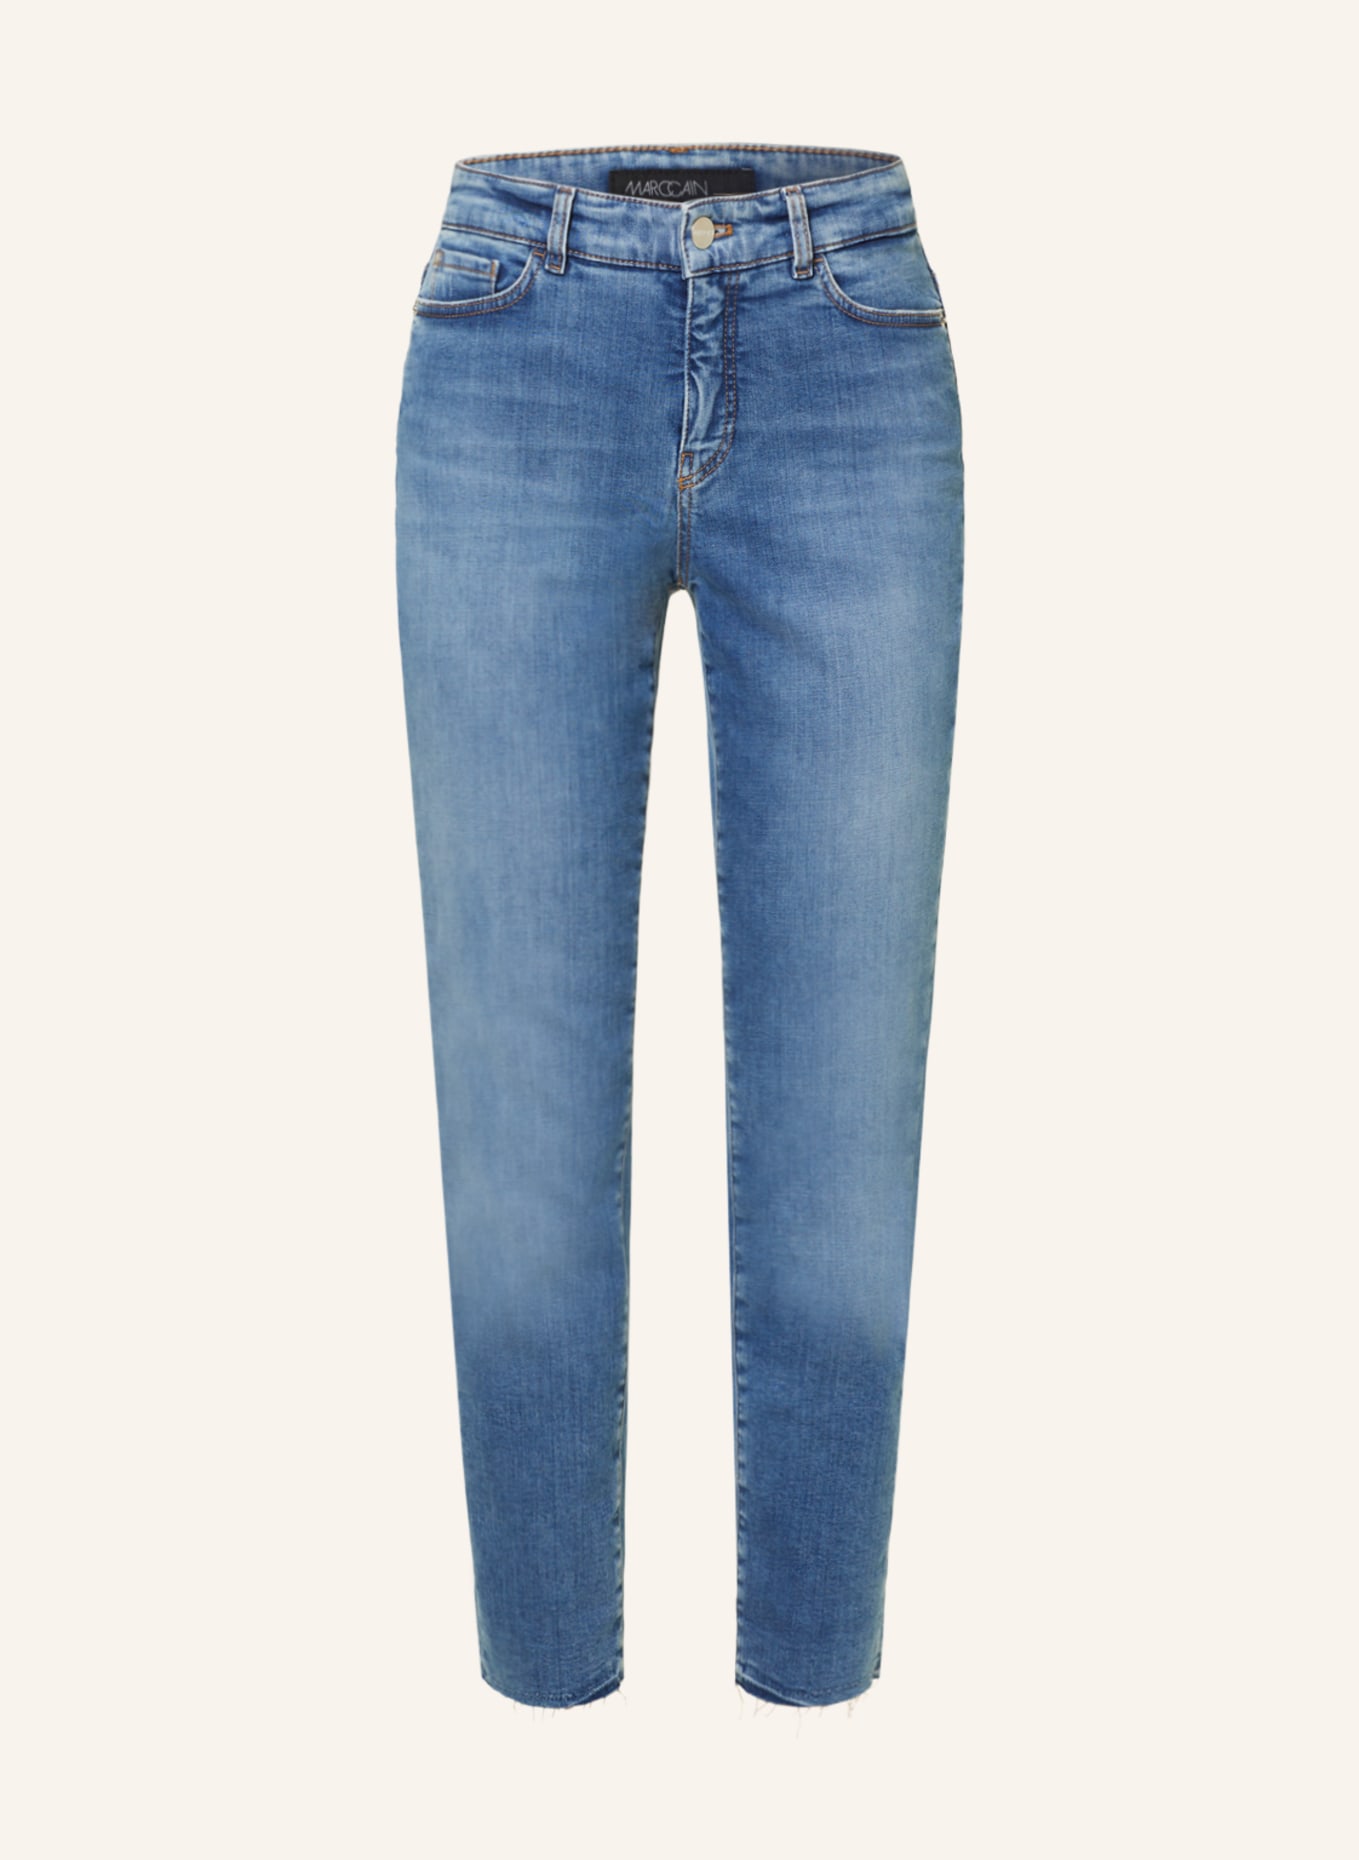 MARC CAIN 7/8-Jeans SILEA, Farbe: 352 vintage blue (Bild 1)